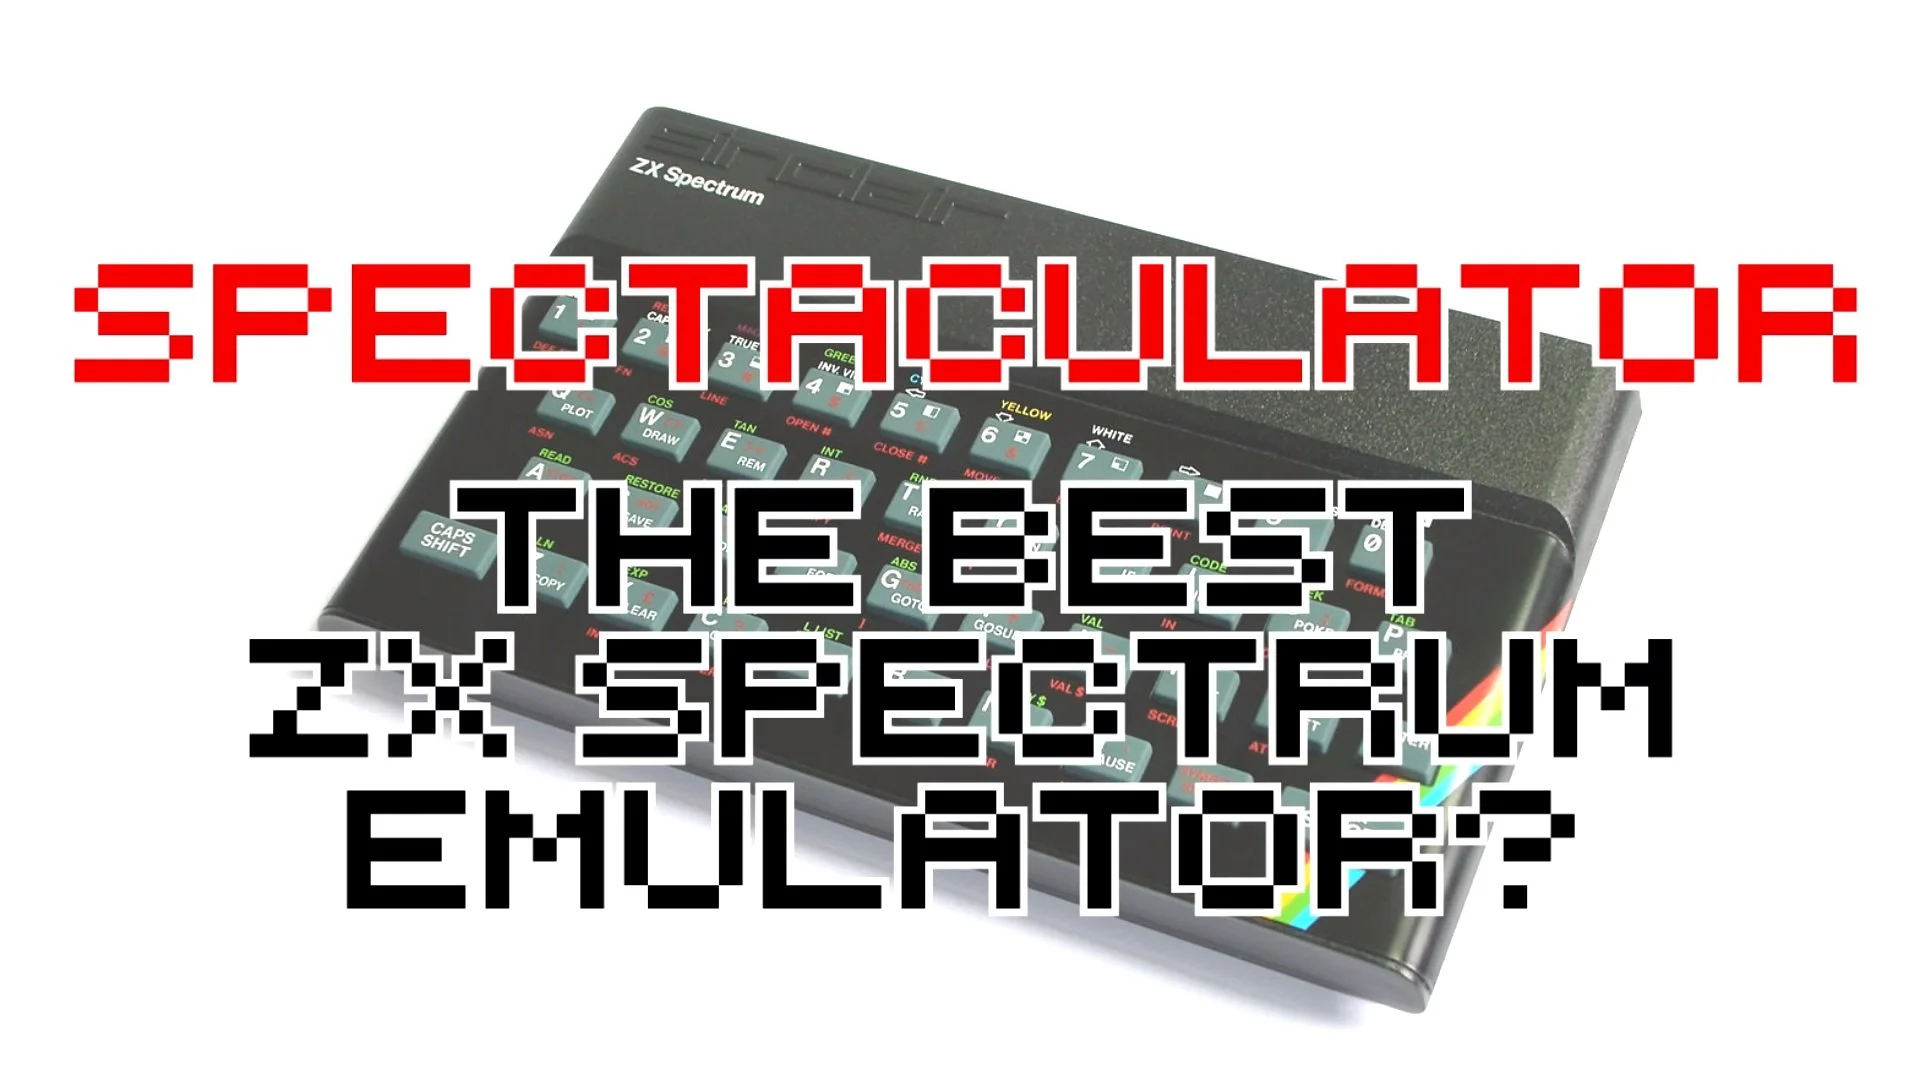 Spectaculator – The Best ZX Spectrum Emulator?